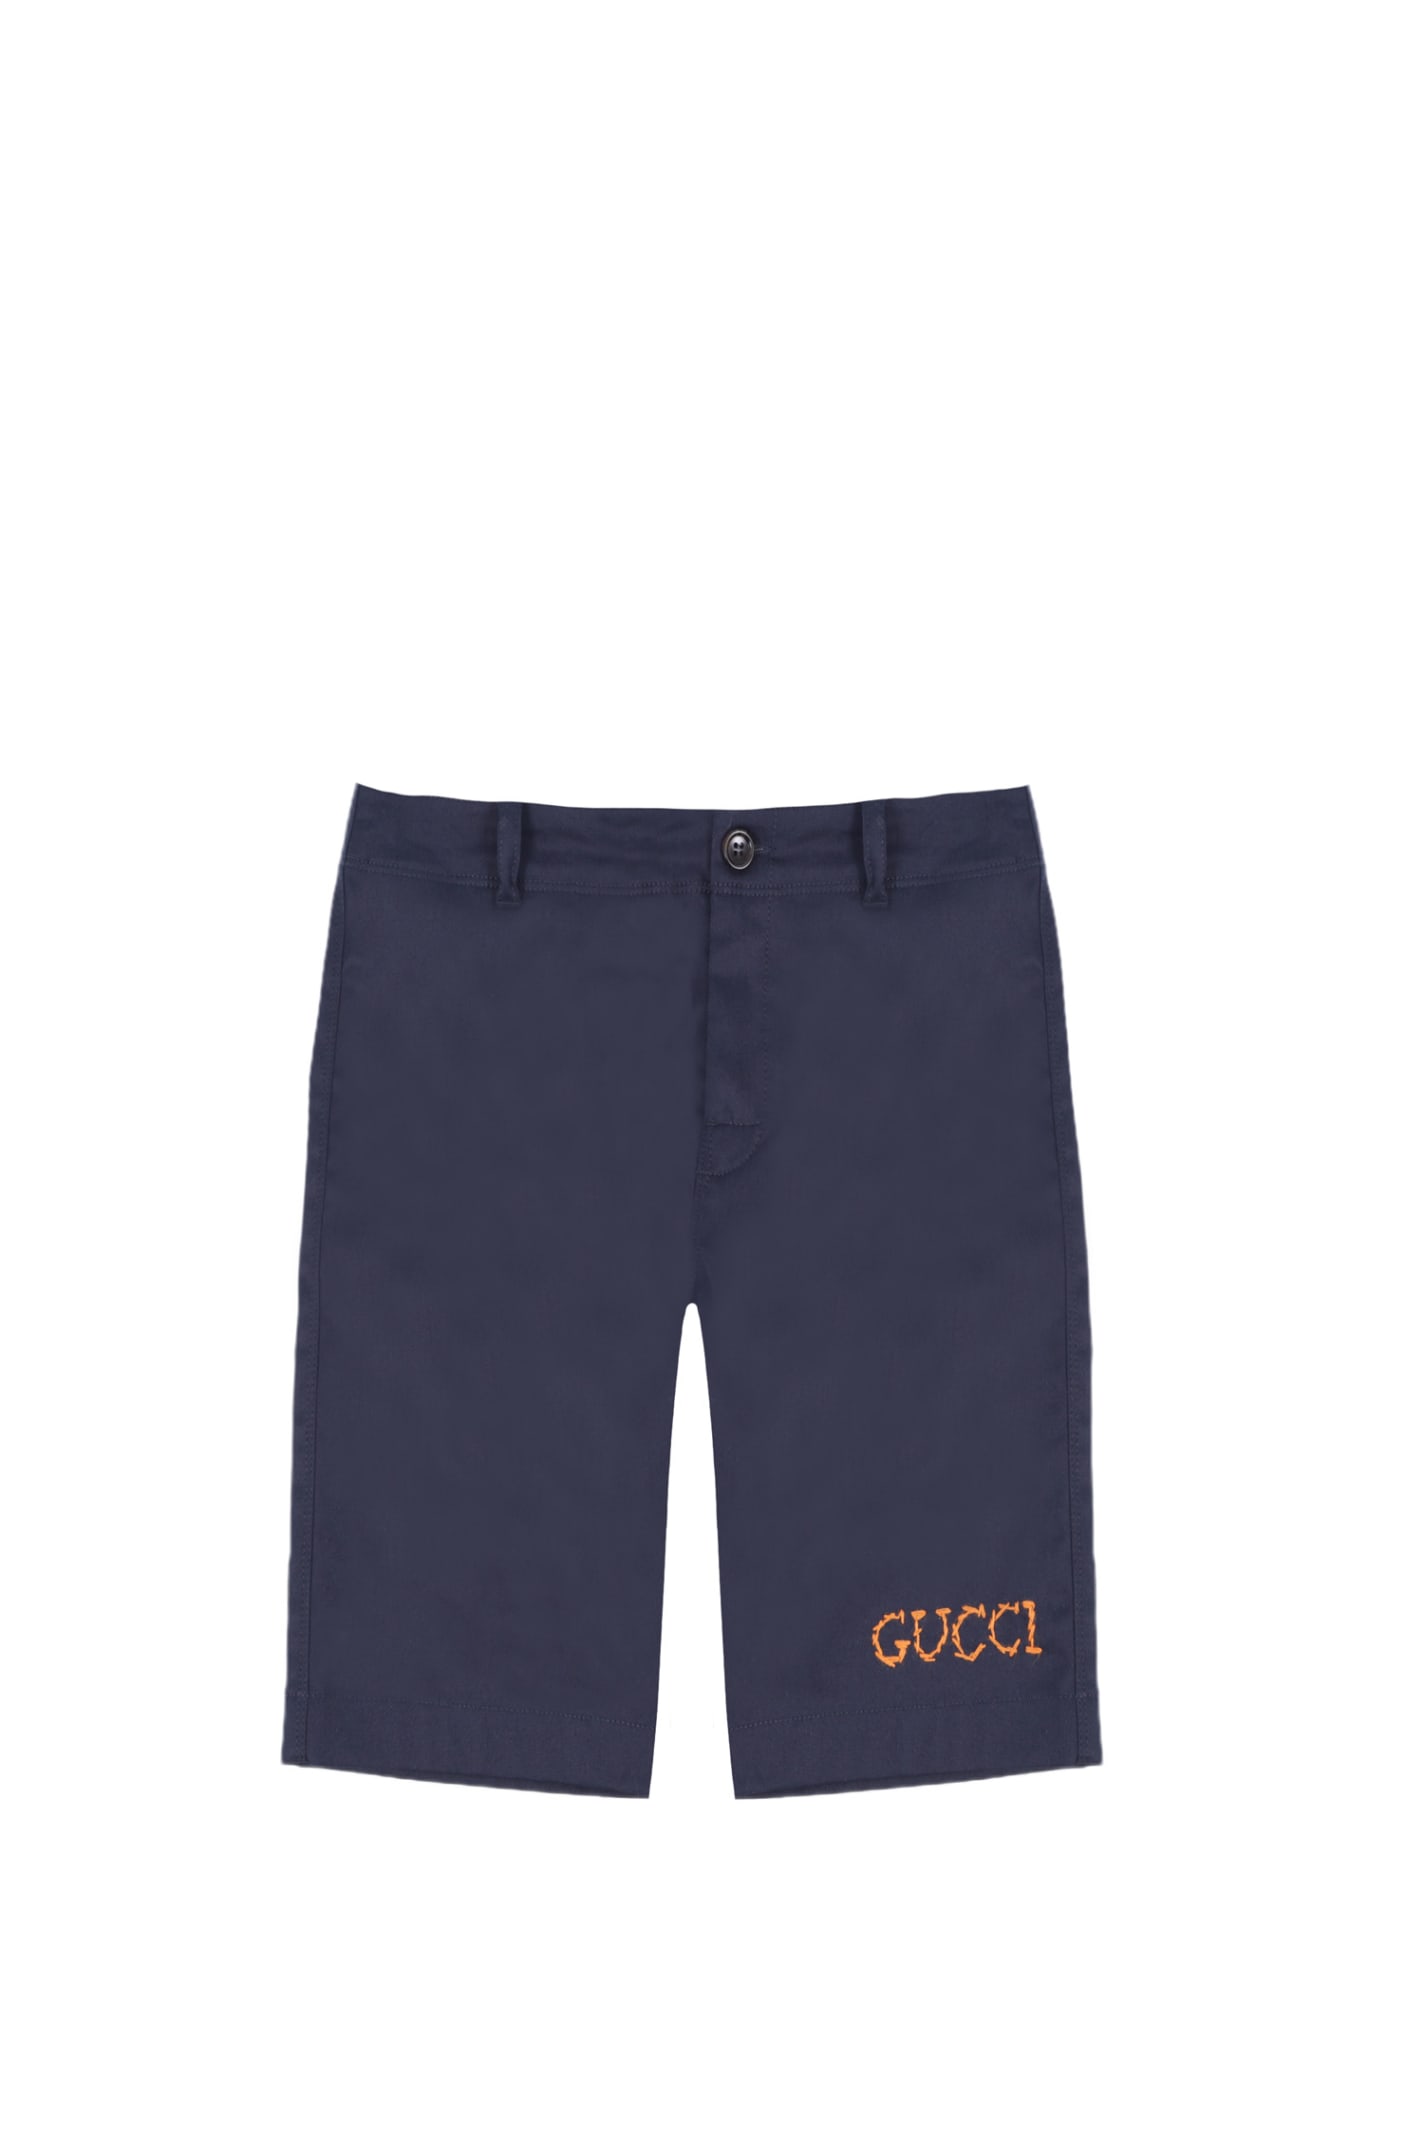 Gucci Cotton Shorts